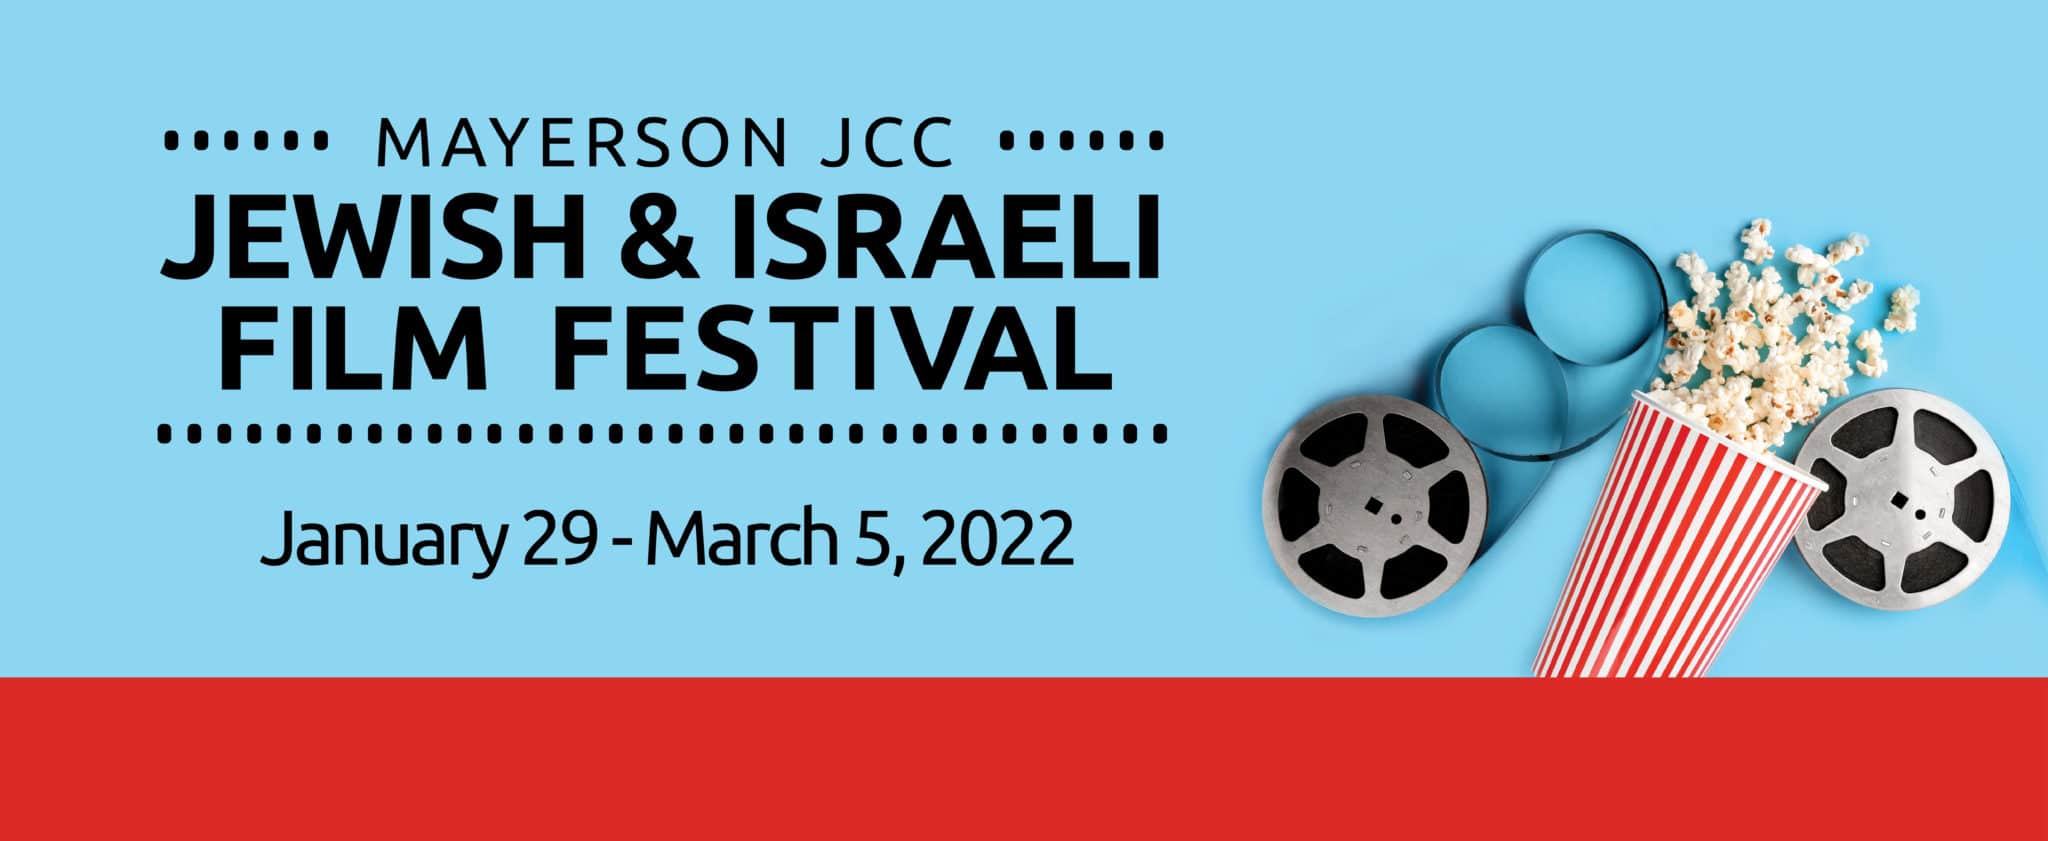 Jewish and Israeli Film Festival